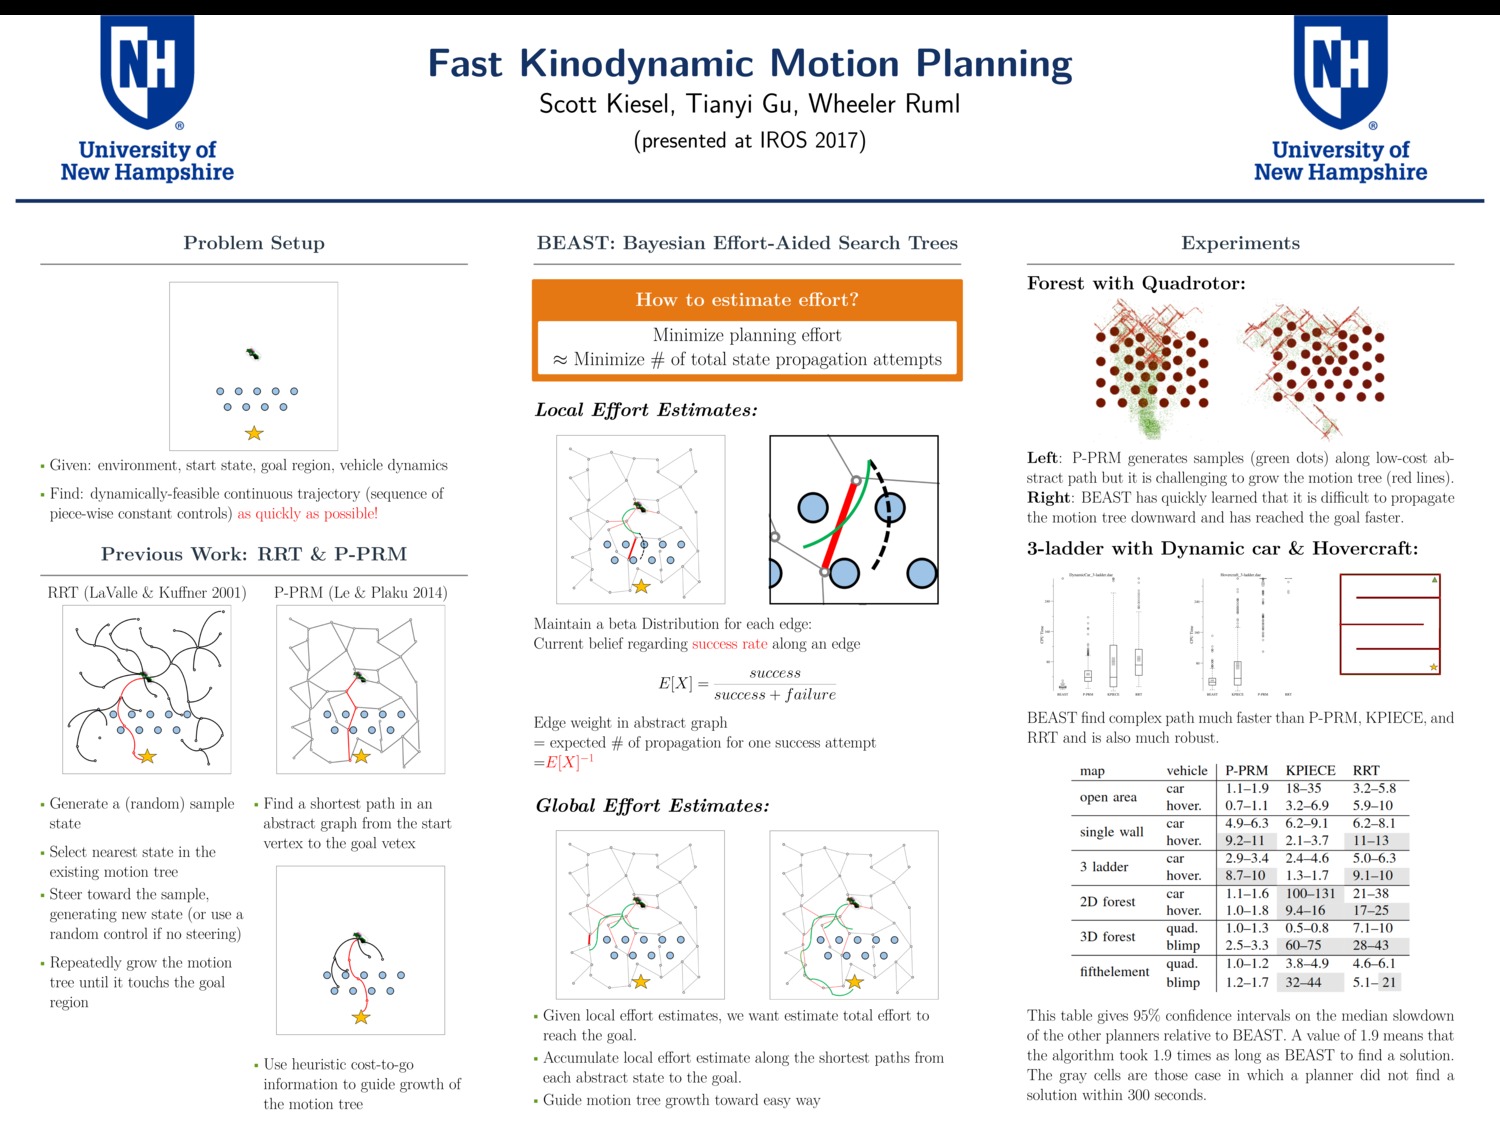 Fast Kinodynamic Motion Planning by tg1034